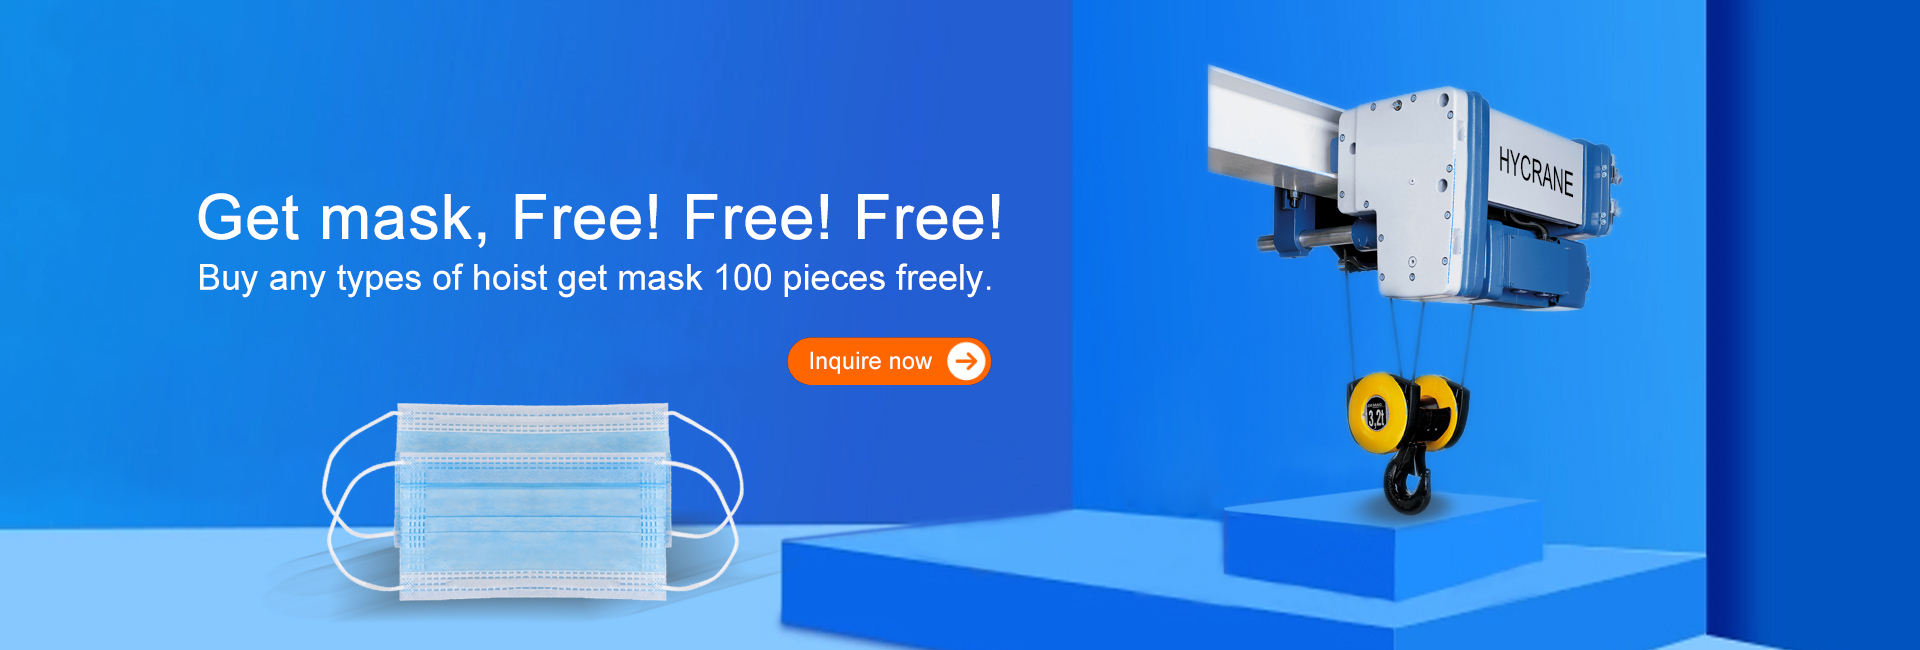 buy any type of hoist get free masks